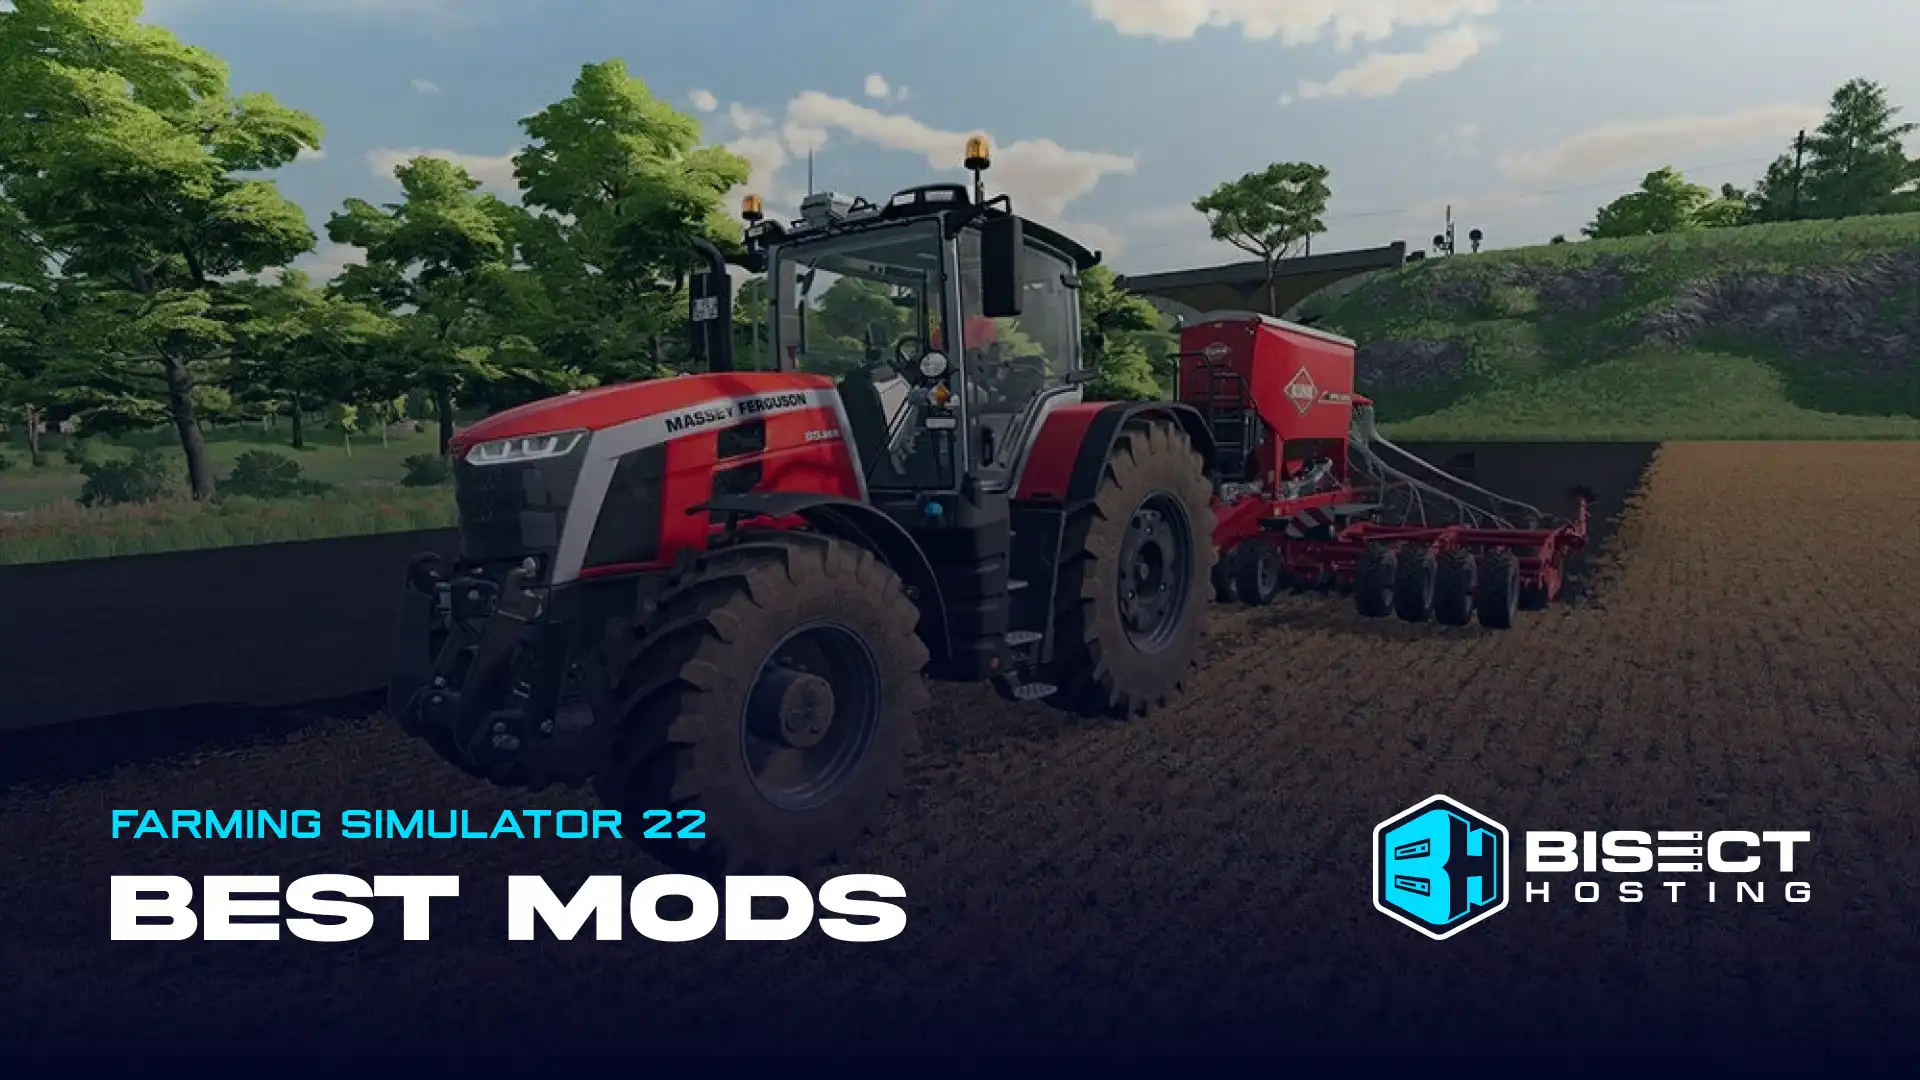 Farming Simulator 22 Mod Guide: Top 10 Best Mods & How to Install Them